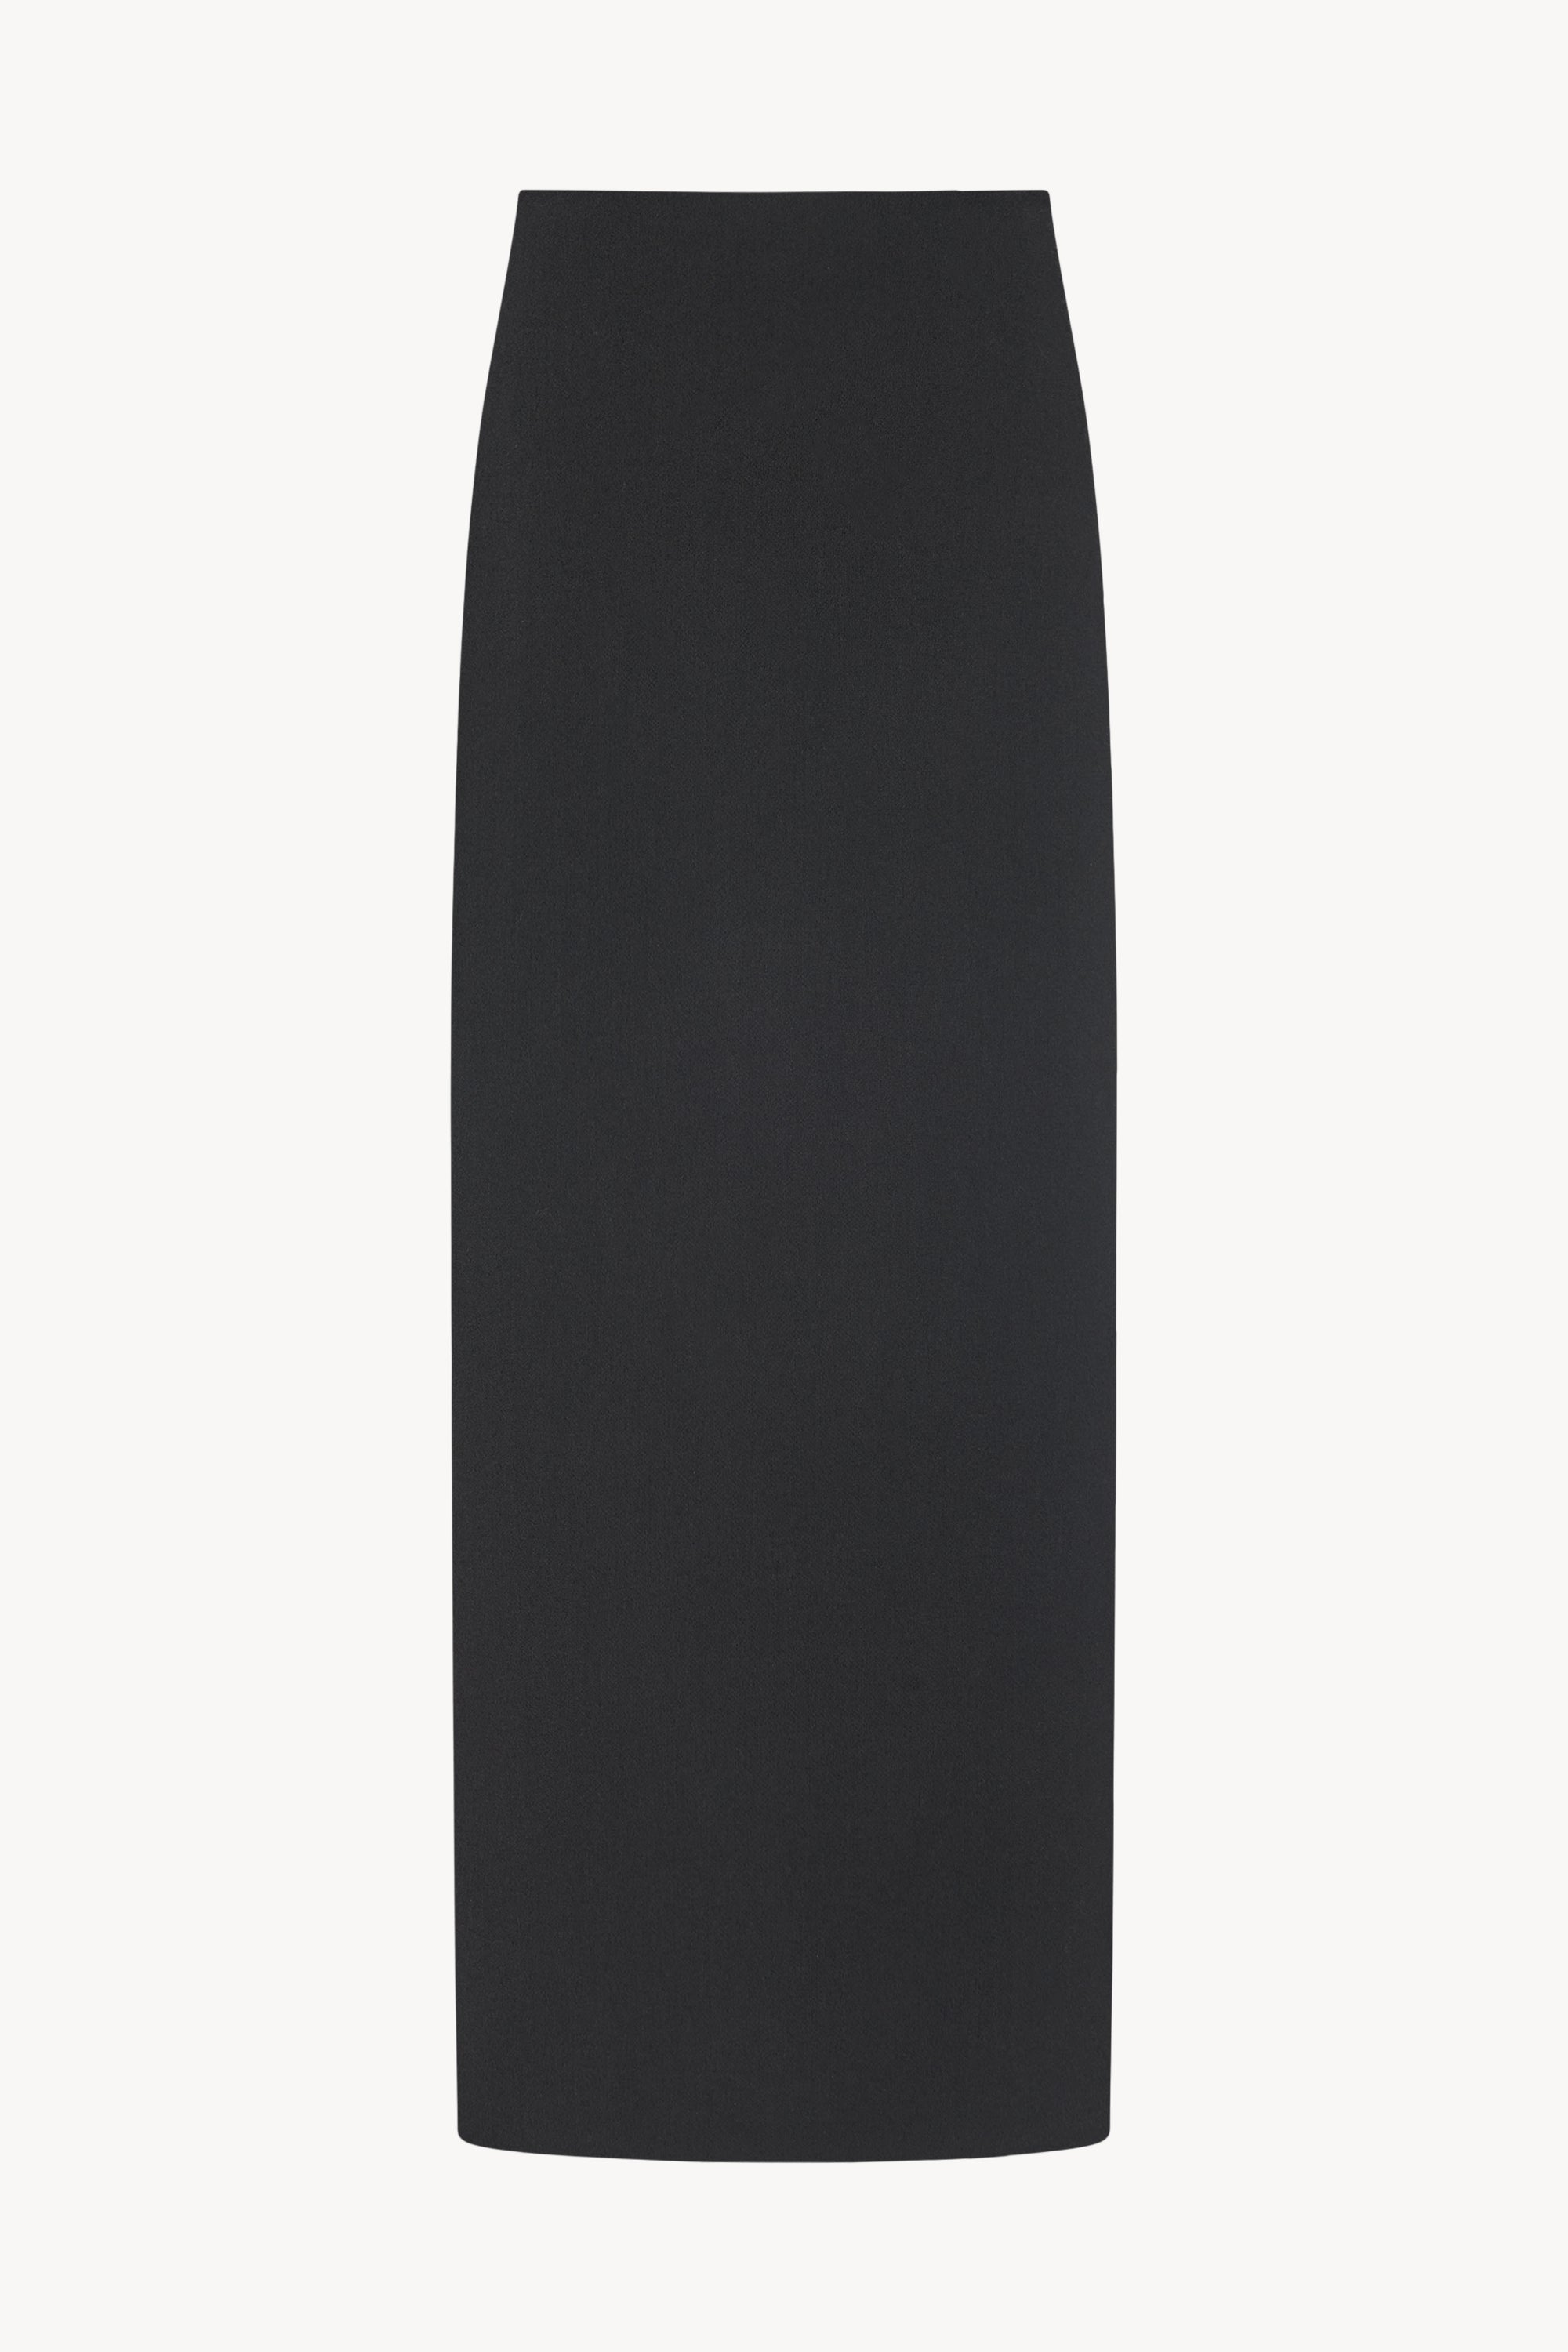 Bartelle Skirt Black in Virgin Wool and Silk – The Row